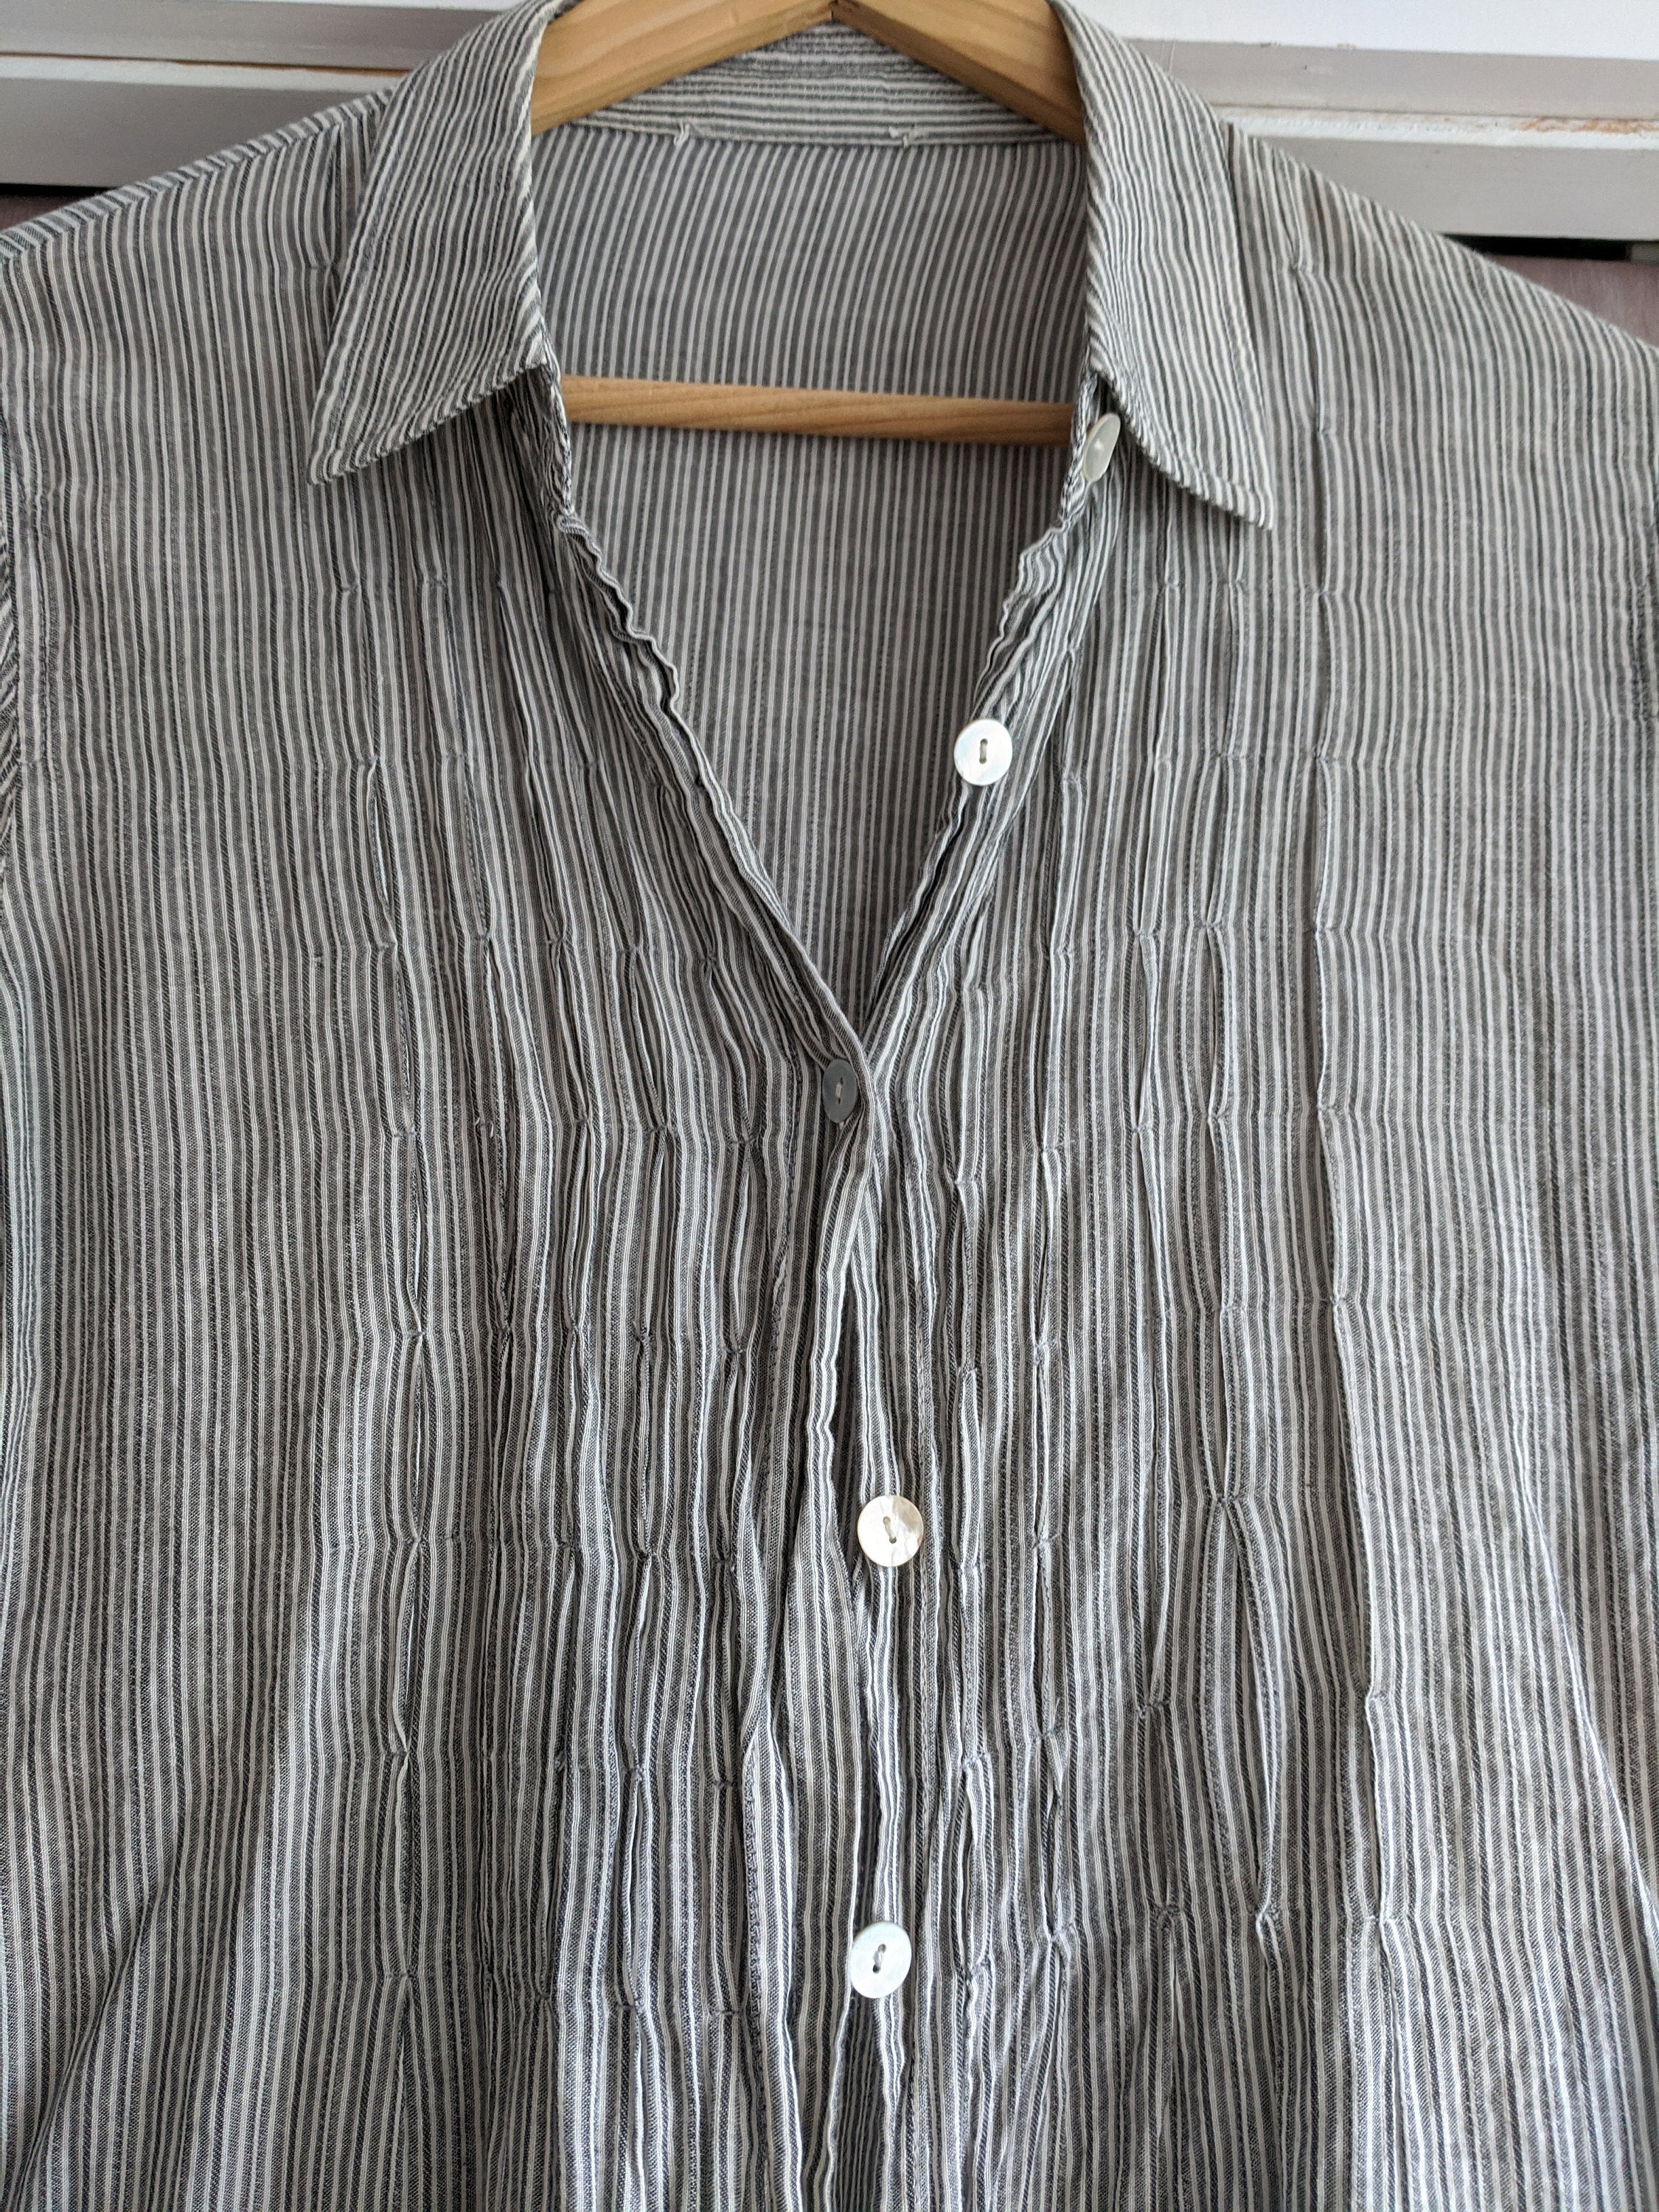 Light pinstripe cotton blouse | Etsy